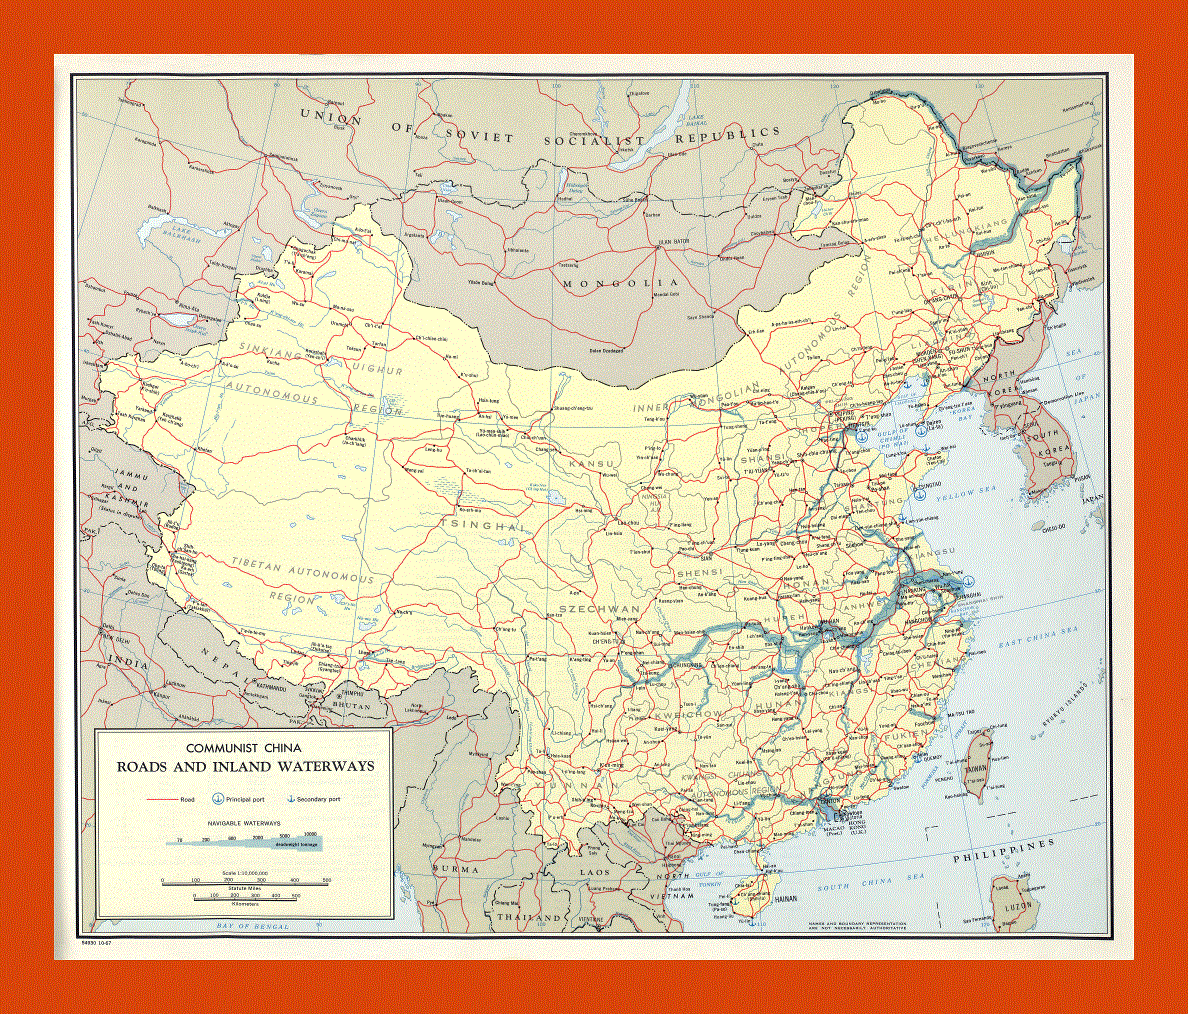 Roads and inland waterways map of Communist China - 1967